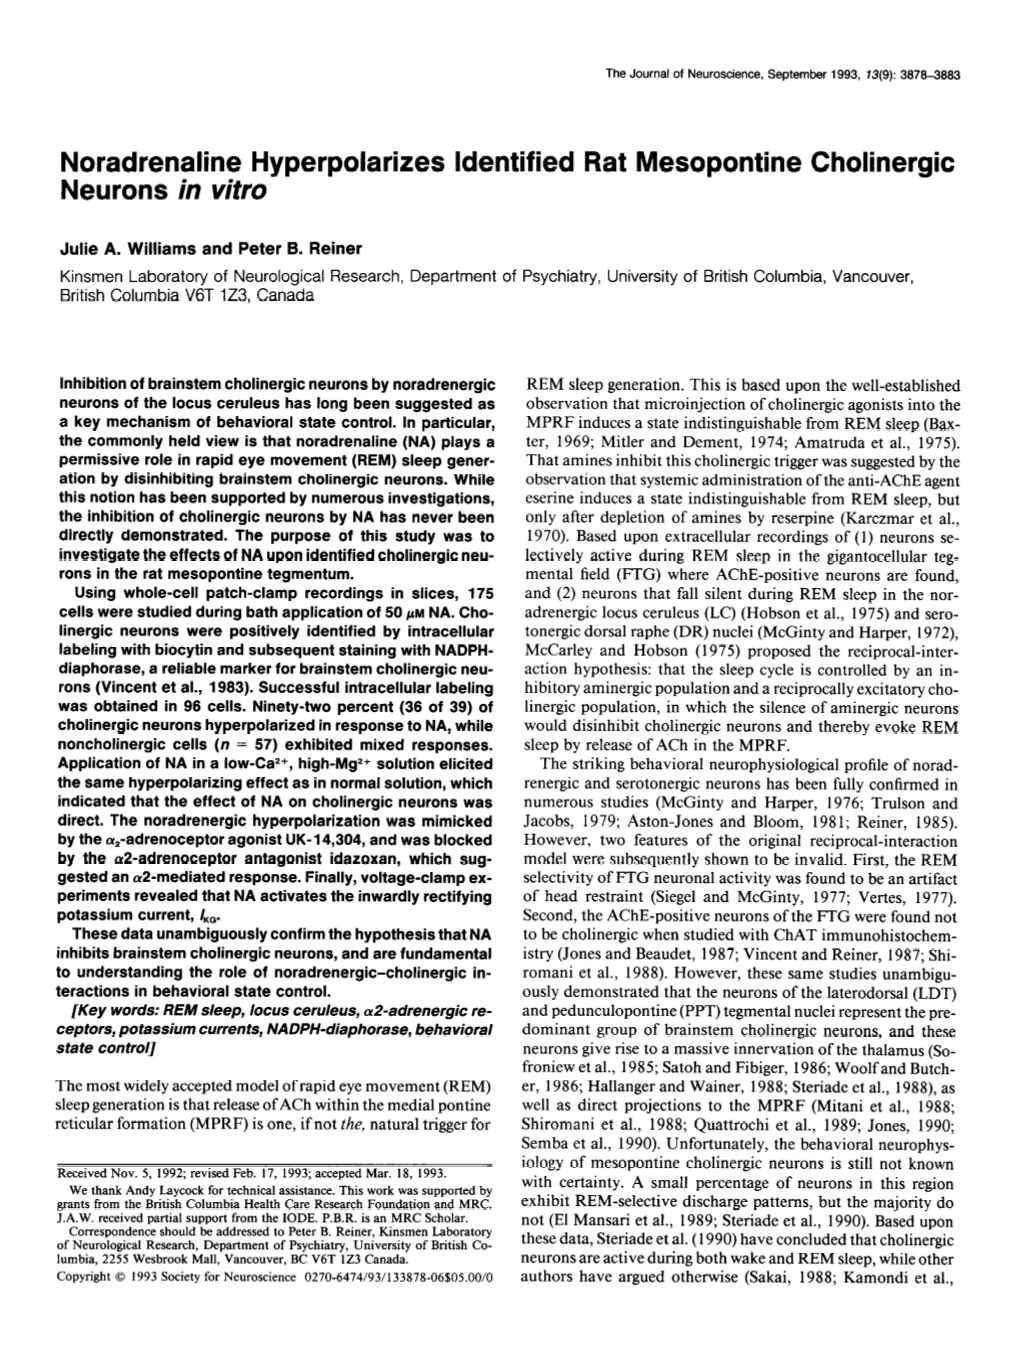 Noradrenaline Hyperpolarizes Identified Rat Mesopontine Cholinergic Neurons in Vitro